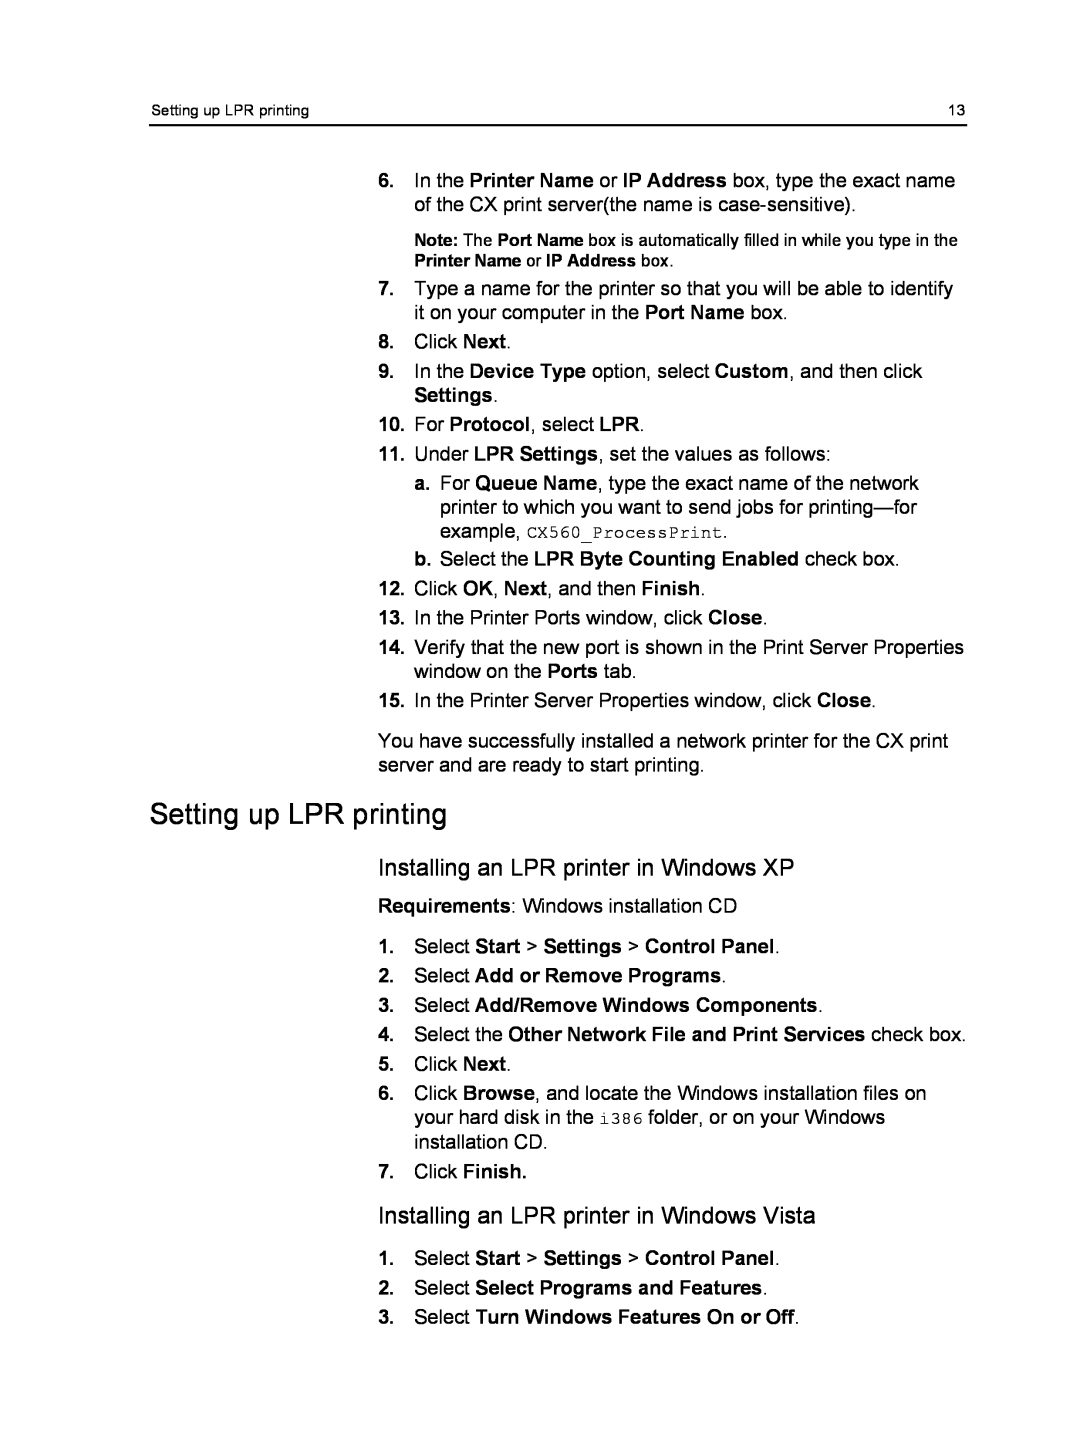 Xerox 550, 560 manual Installing an LPR printer in Windows XP, Installing an LPR printer in Windows Vista, Click Finish 